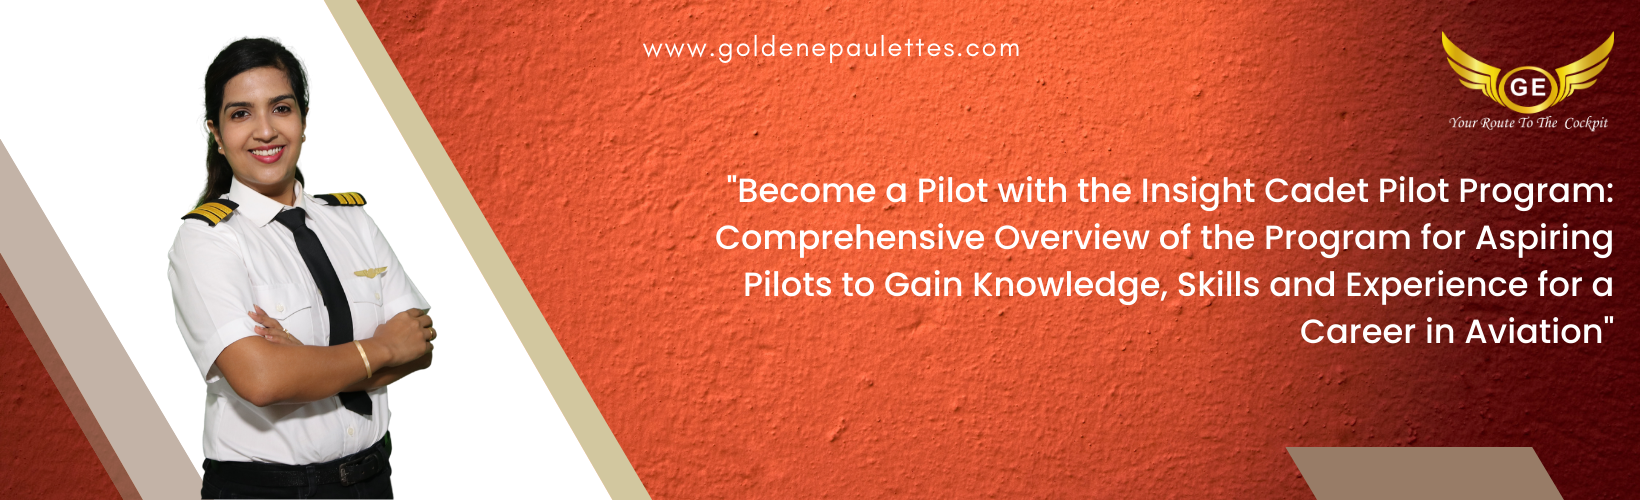 Introduction to the Insight Cadet Pilot Program